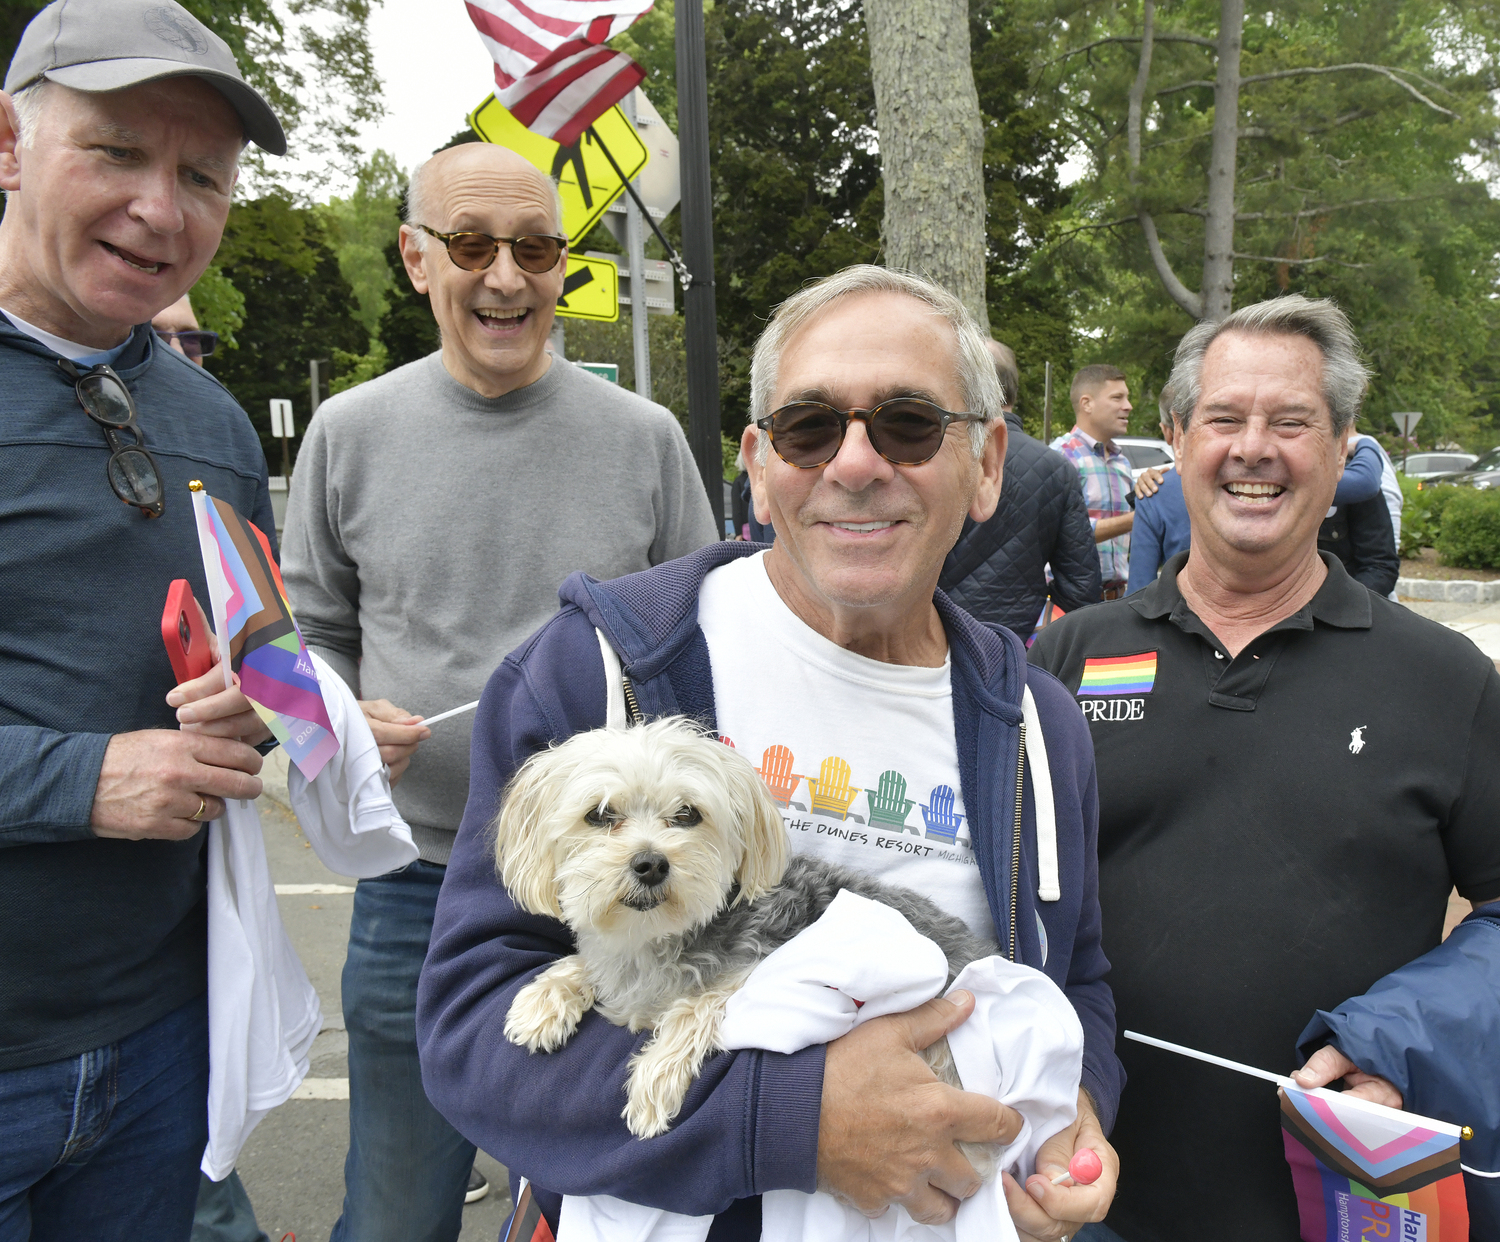 John Wilson, Tony Dawson, Peter Chase with Bentley and Dan Robinson at the Pride Parade on Saturday.   DANA SHAW